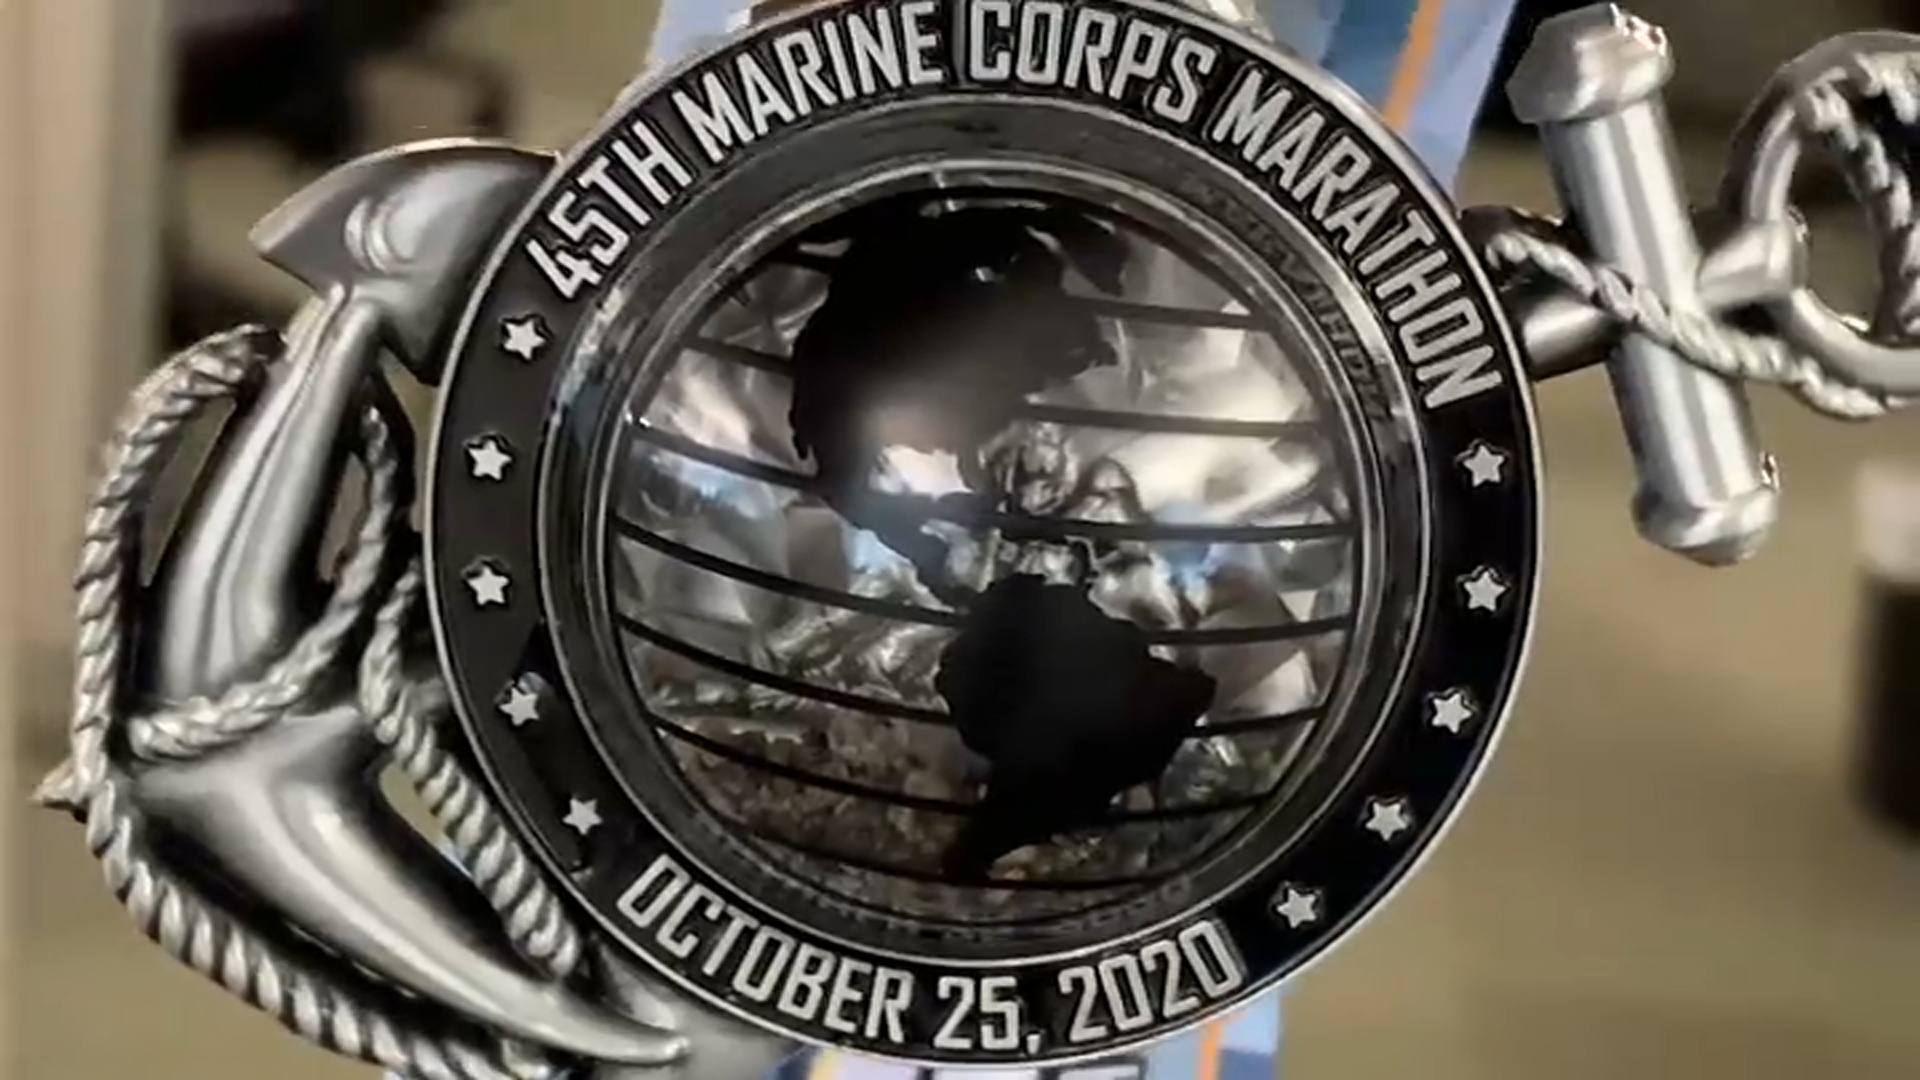 download marine corps marathon photos 2022